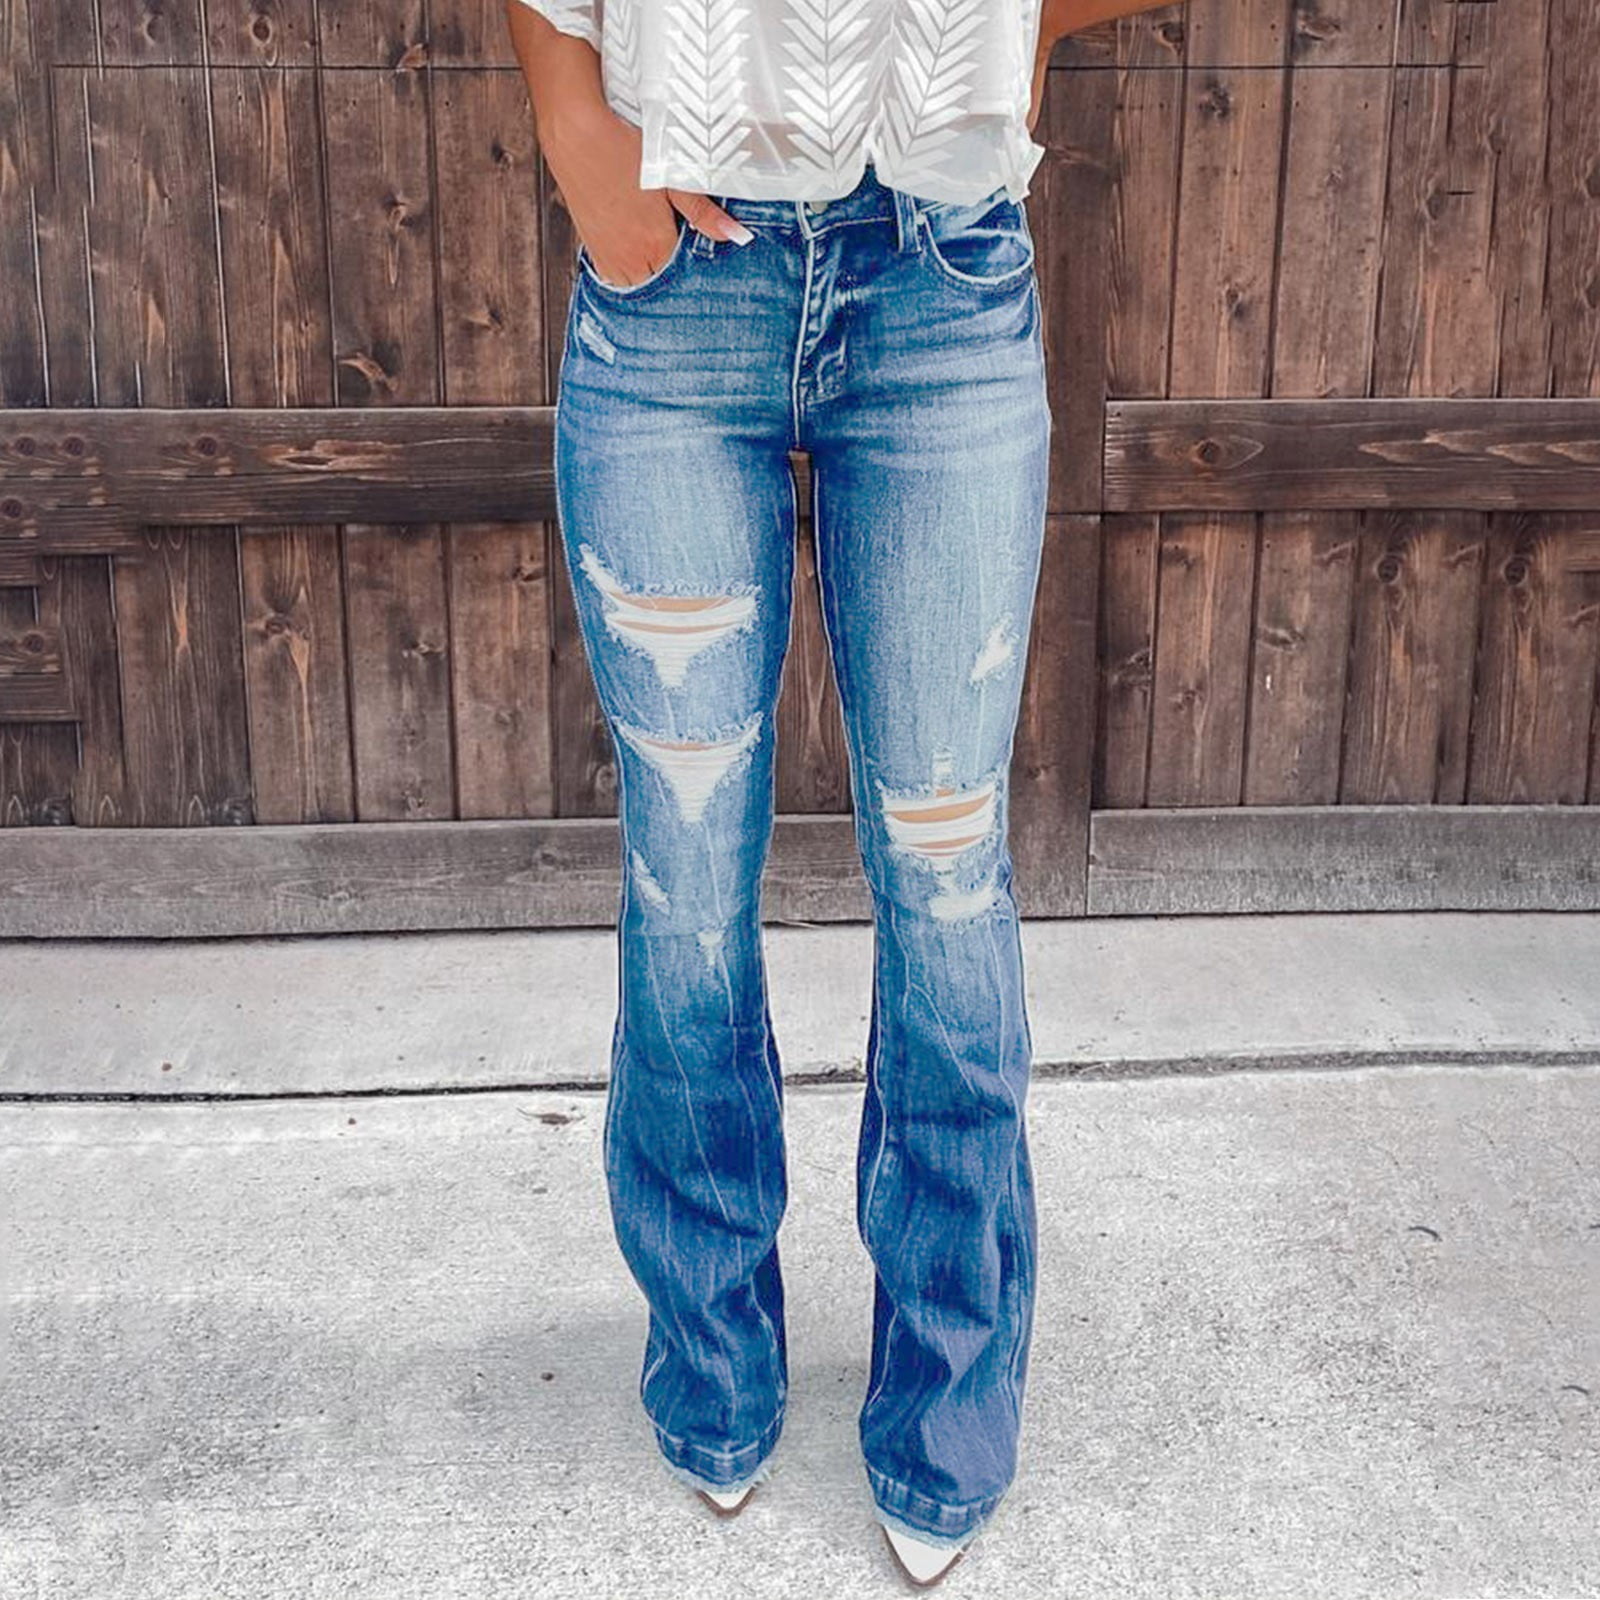 Sofia Jeans Women's Melisa Flare High Rise Coated Pants, 33.5 Inseam,  Sizes 2-20 